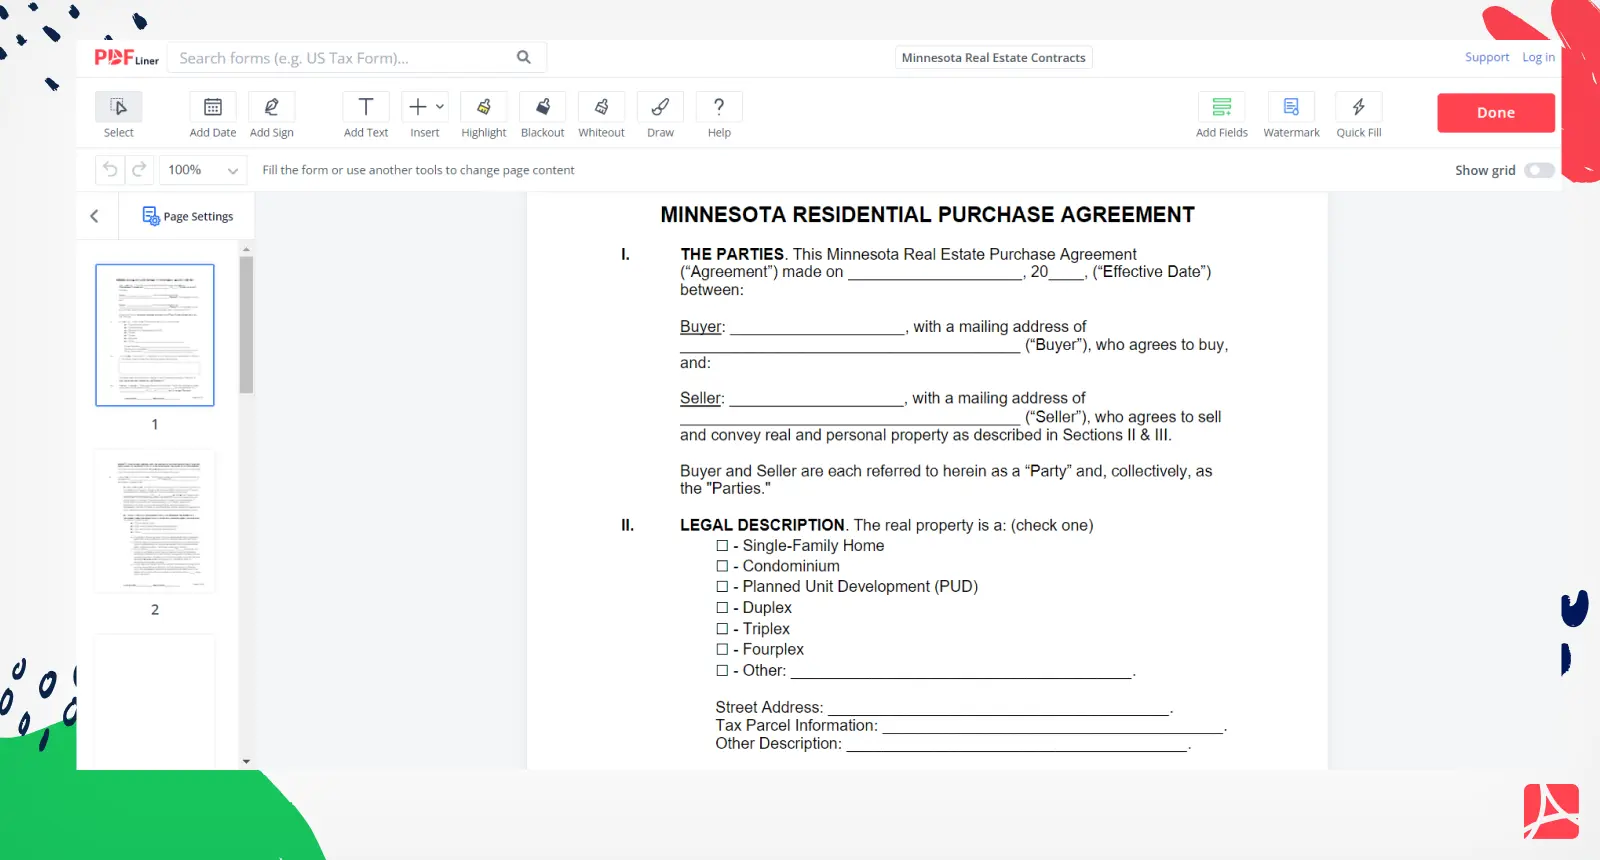 Minnesota Real Estate Contract Form Screenshot